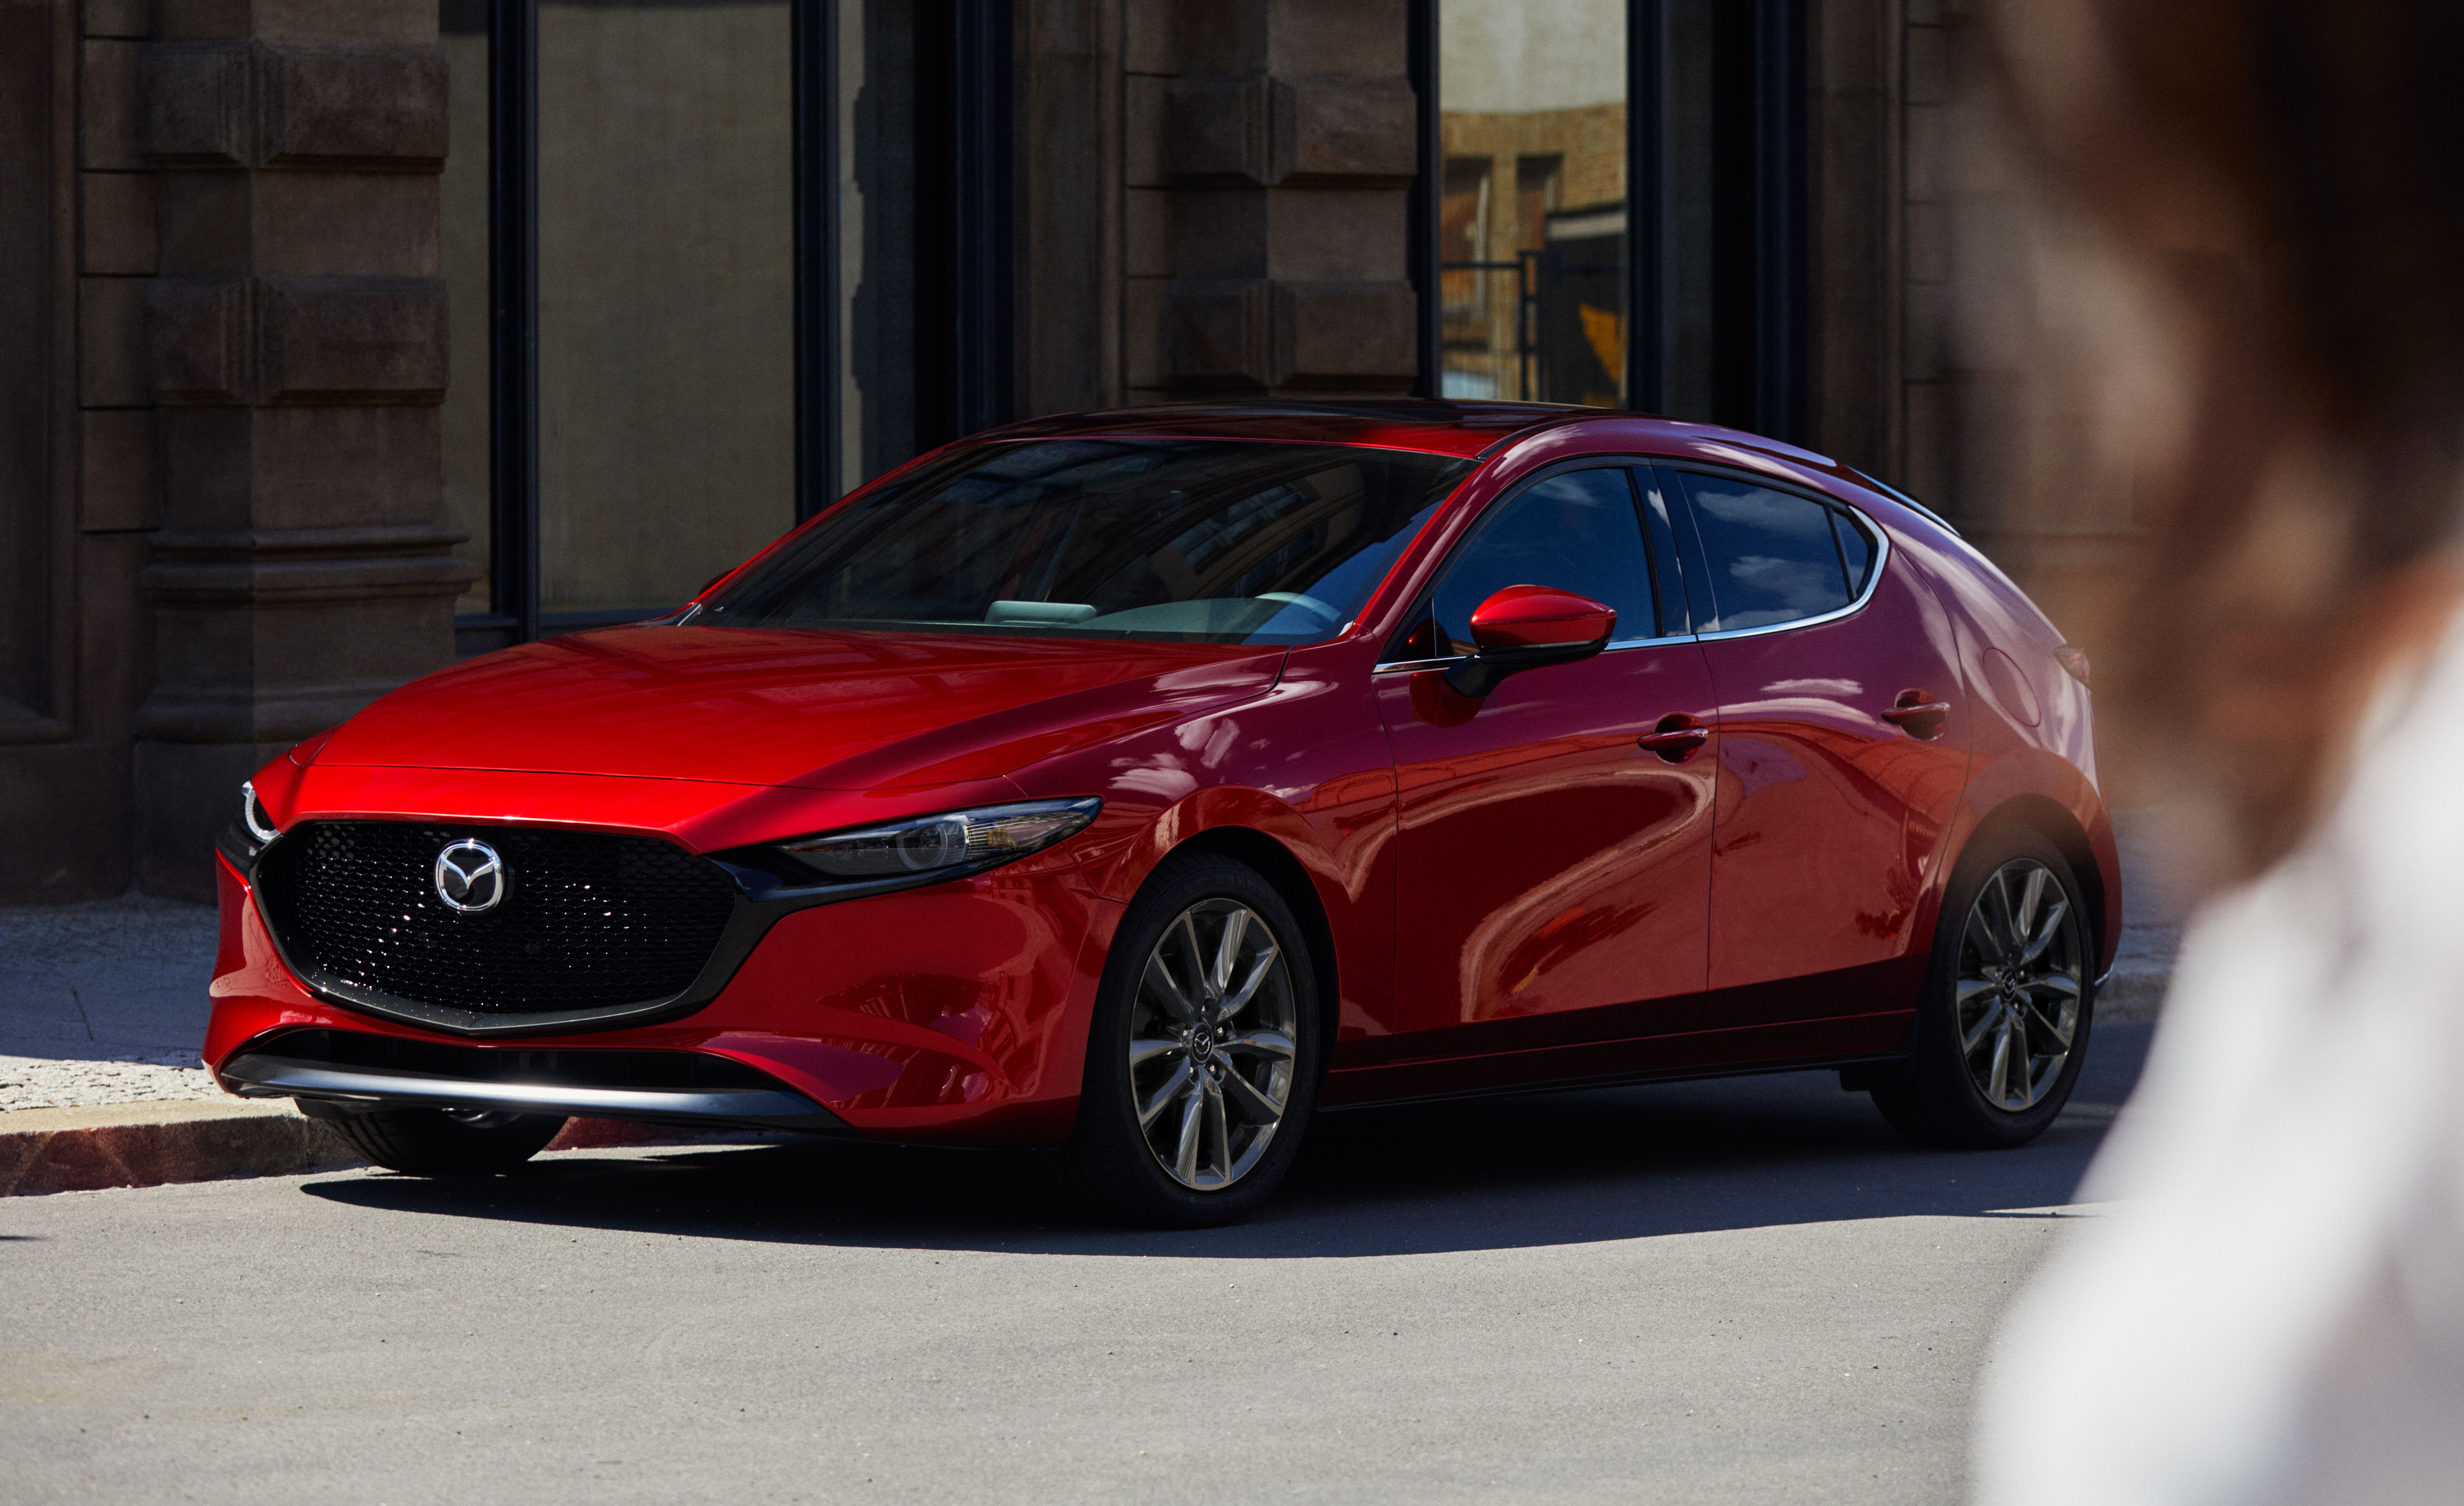 2019 Mazda 3 Revealed - Skyactiv Engines, Newly Available All-Wheel Drive